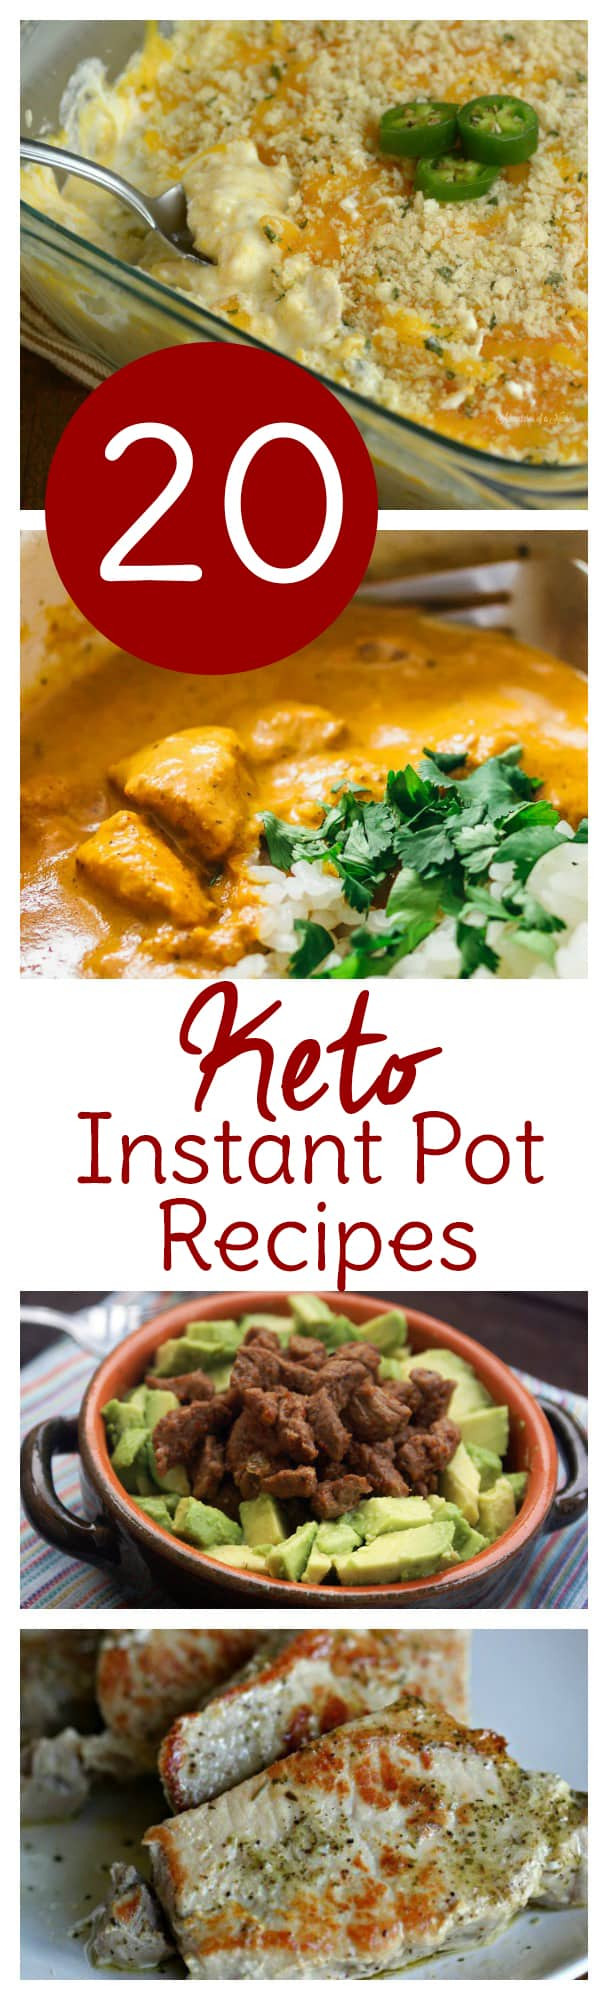 Instapot Keto Recipes Videos
 20 Instant Pot Keto Recipes to Make This Week